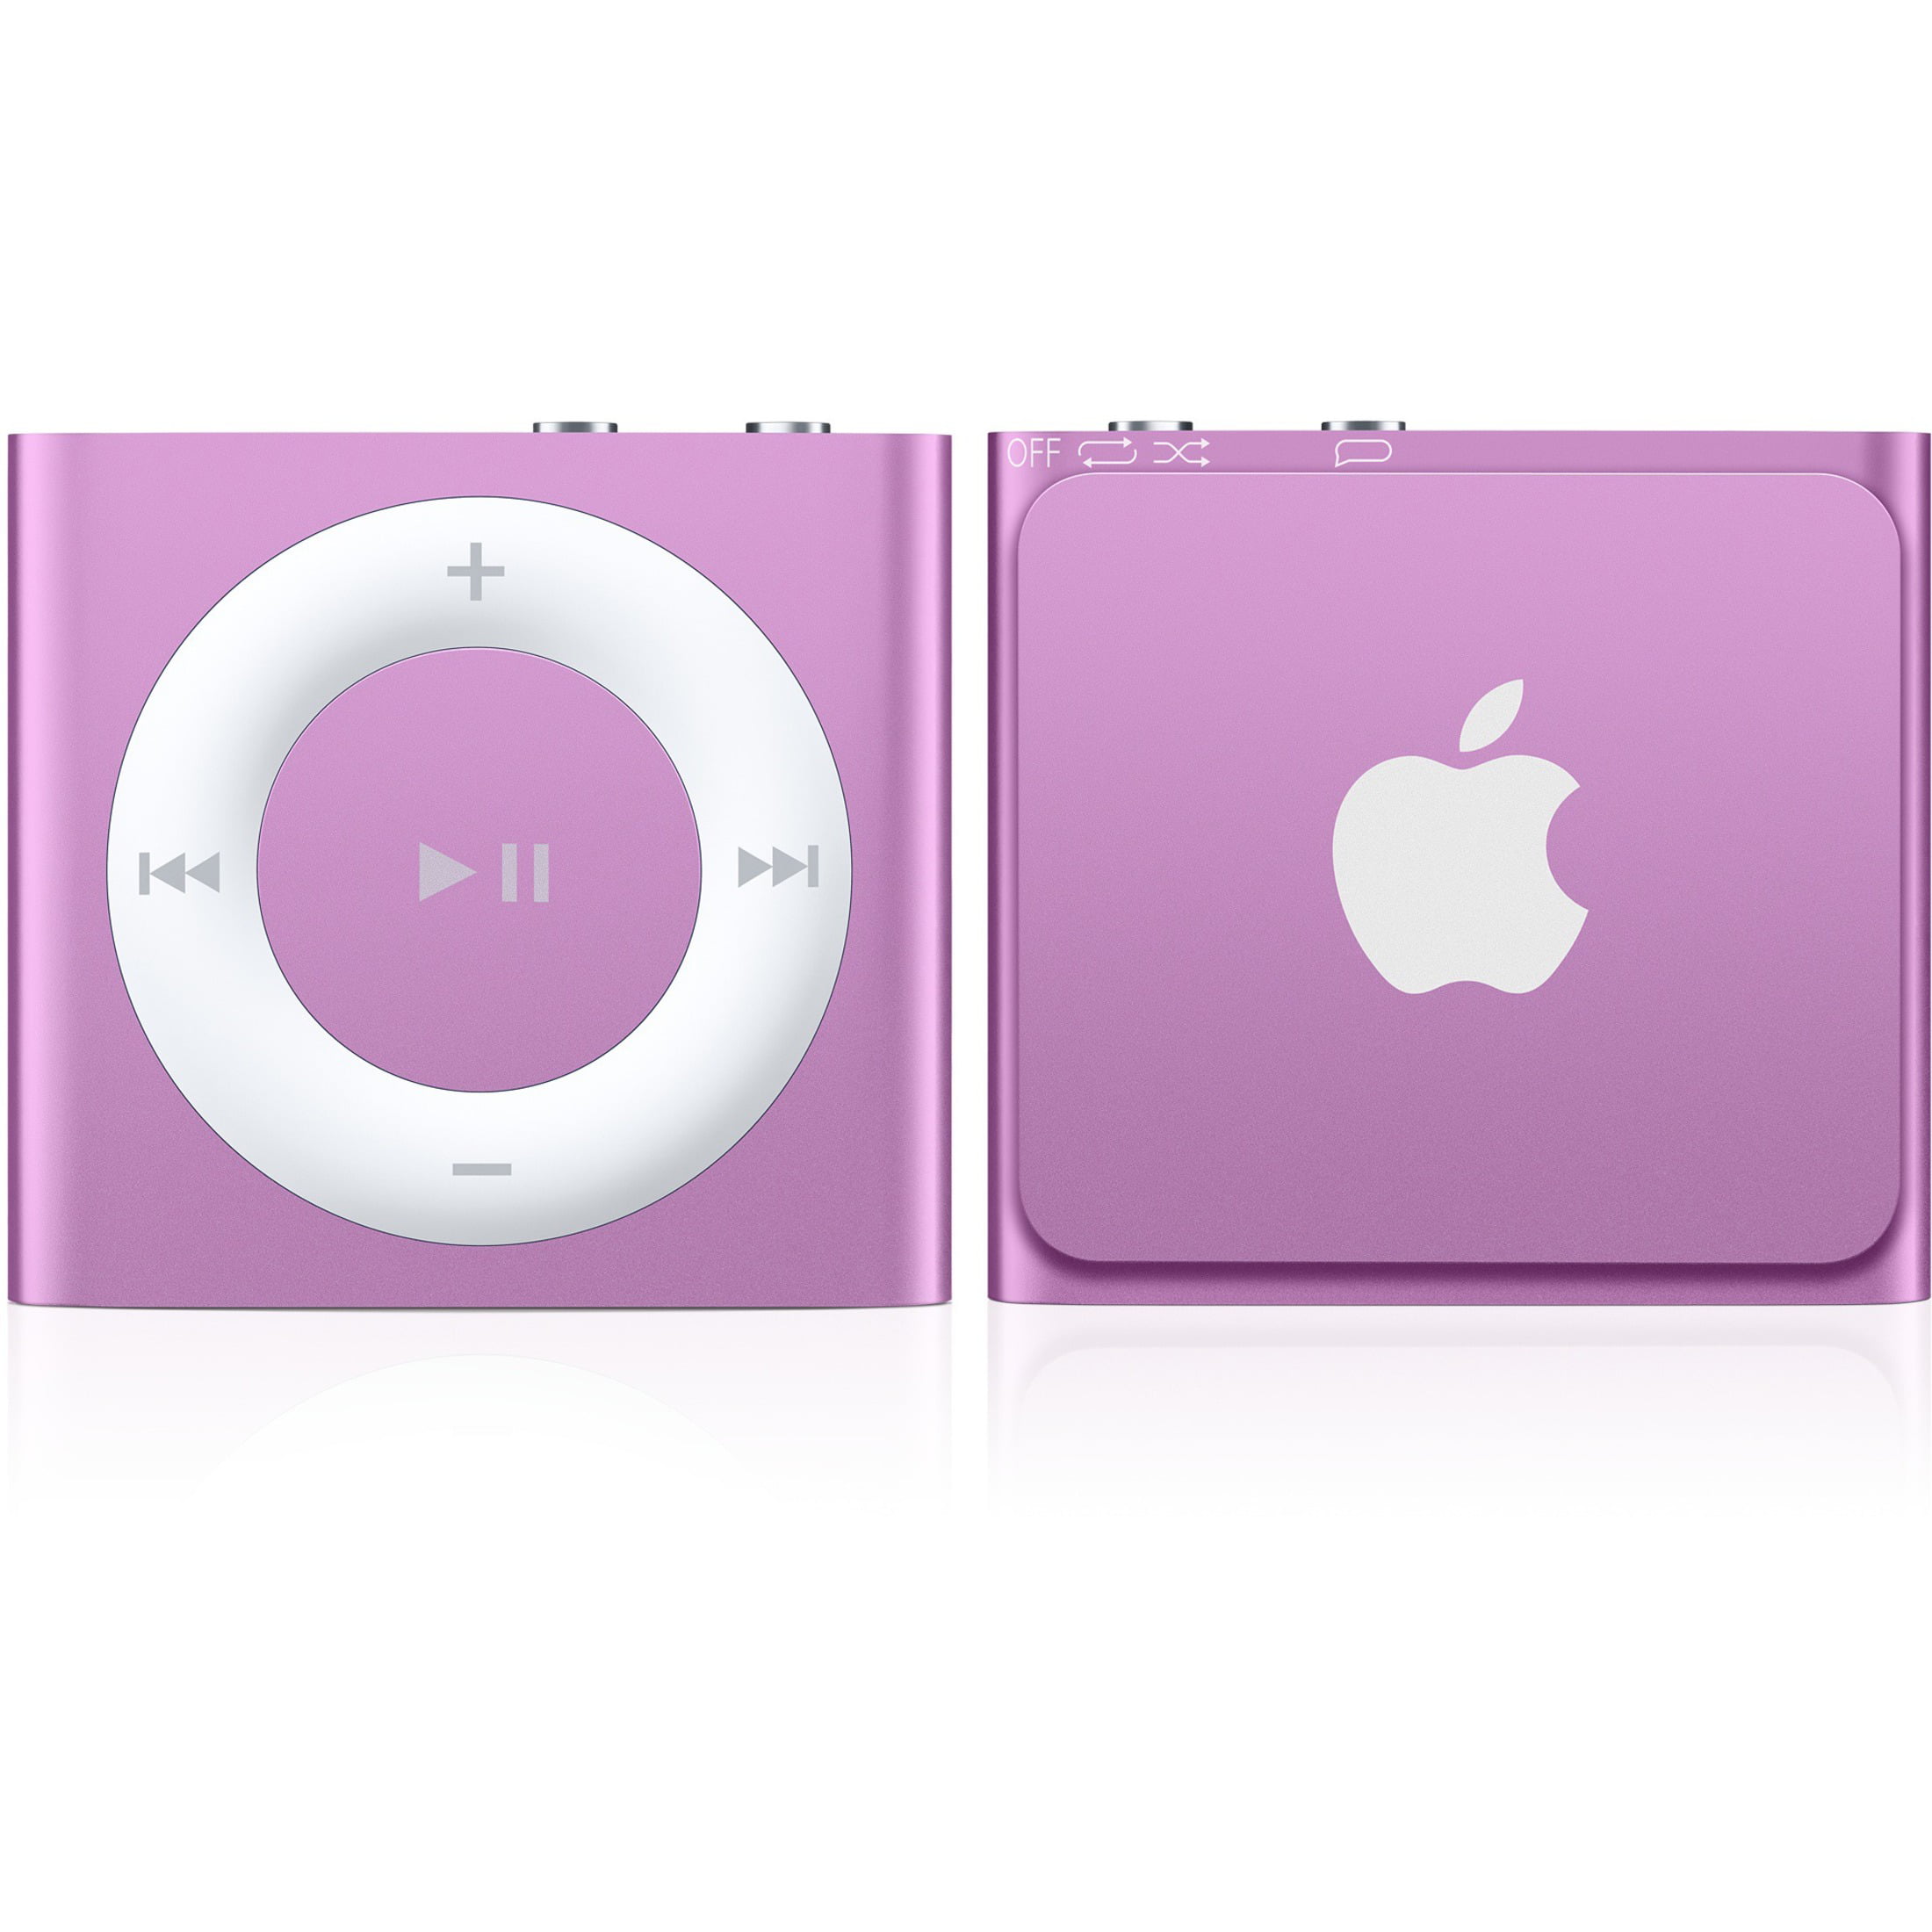 apple-ipod-shuffle-2gb-mp3-player-purple-walmart-com